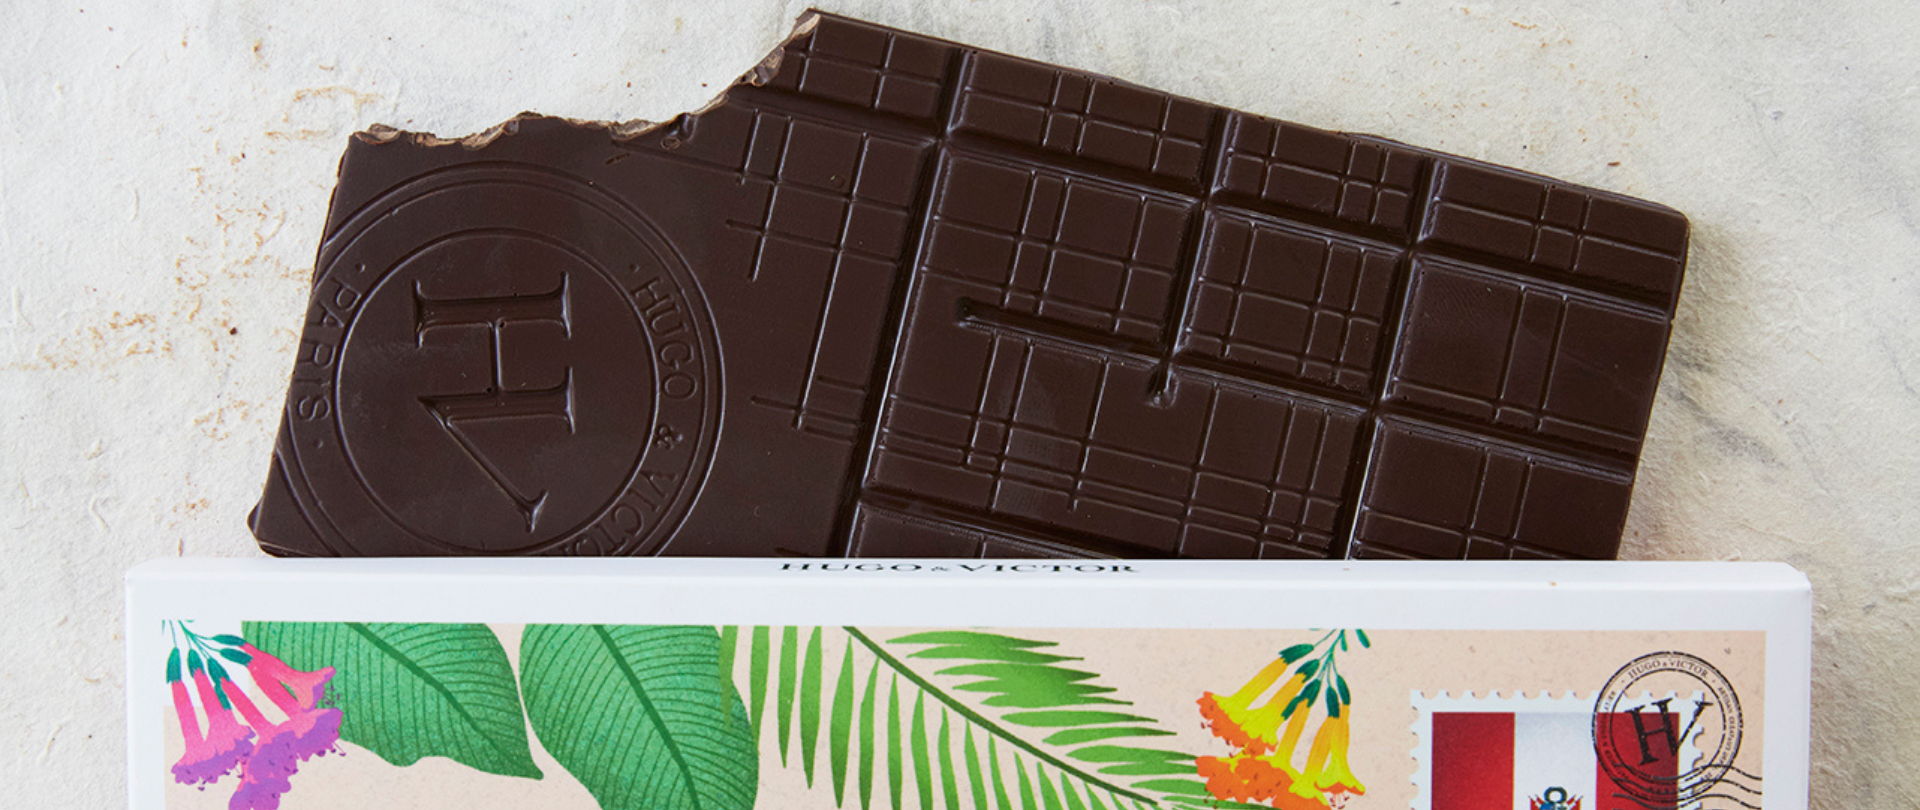 Tablettes de chocolat artisanal sans lécithine de soja - Chocolatier de Luxe